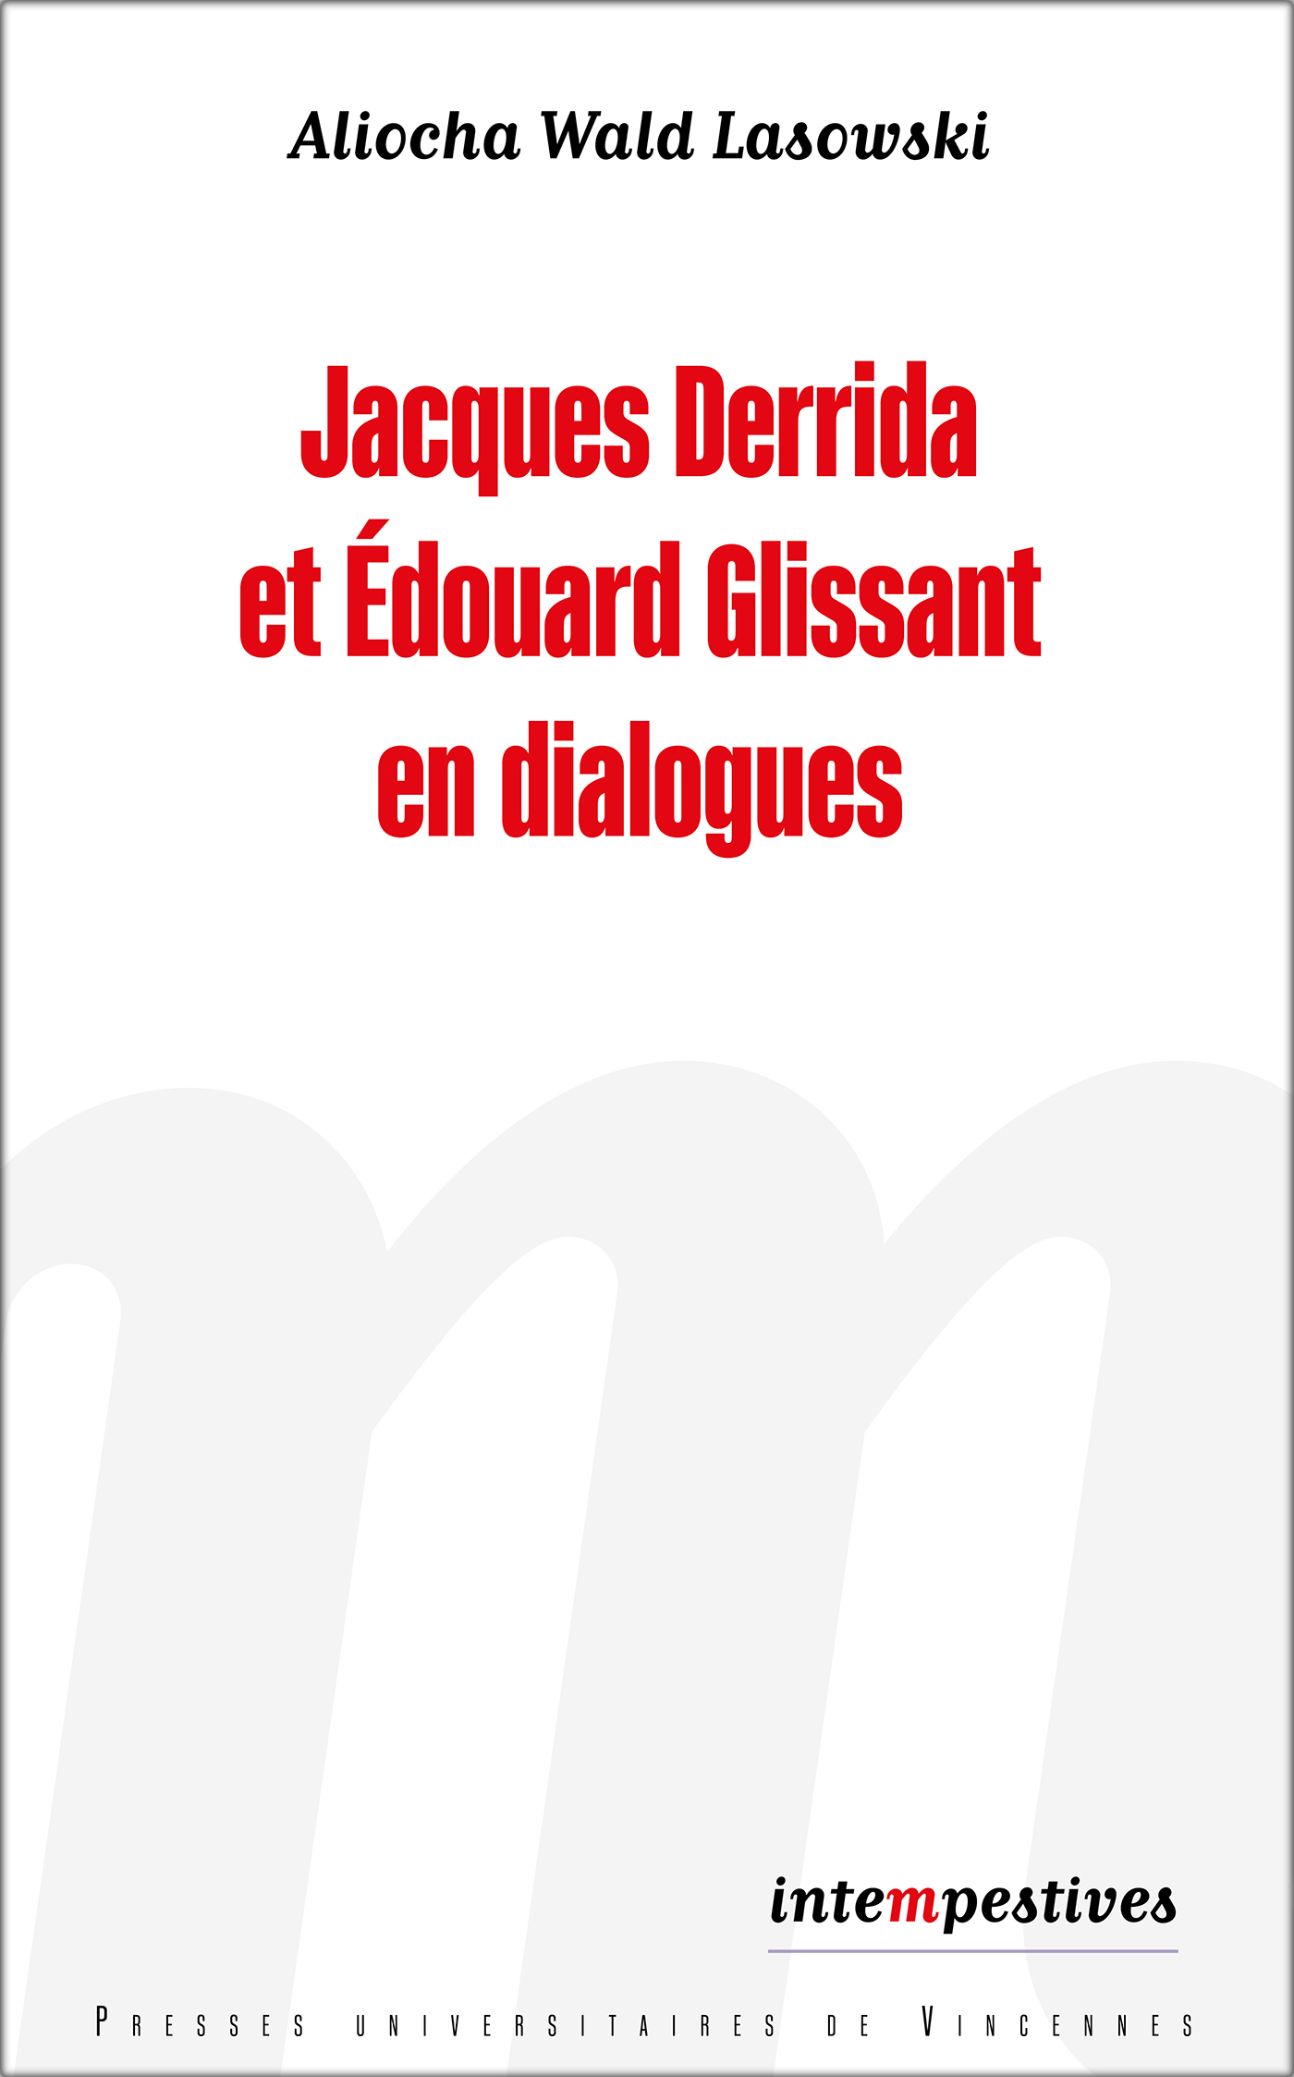 Aliocha Wald Lasowski, Jacques Derrida et Edouard Glissant en dialogues